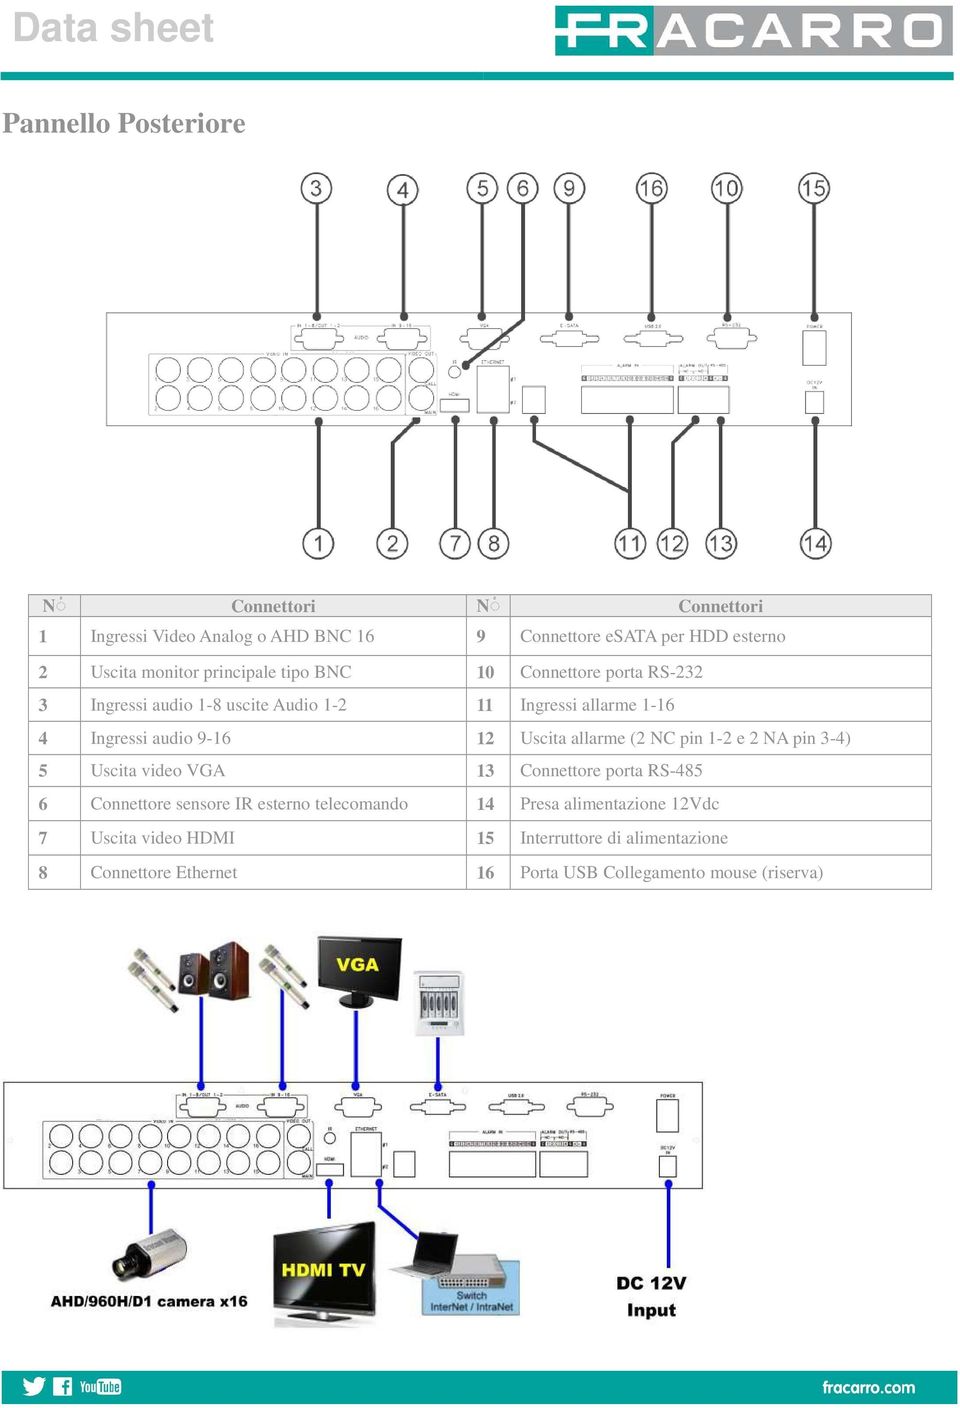 Uscita allarme (2 NC pin 1-2 e 2 NA pin 3-4) 5 Uscita video VGA 13 Connettore porta RS-485 6 Connettore sensore IR esterno telecomando 14